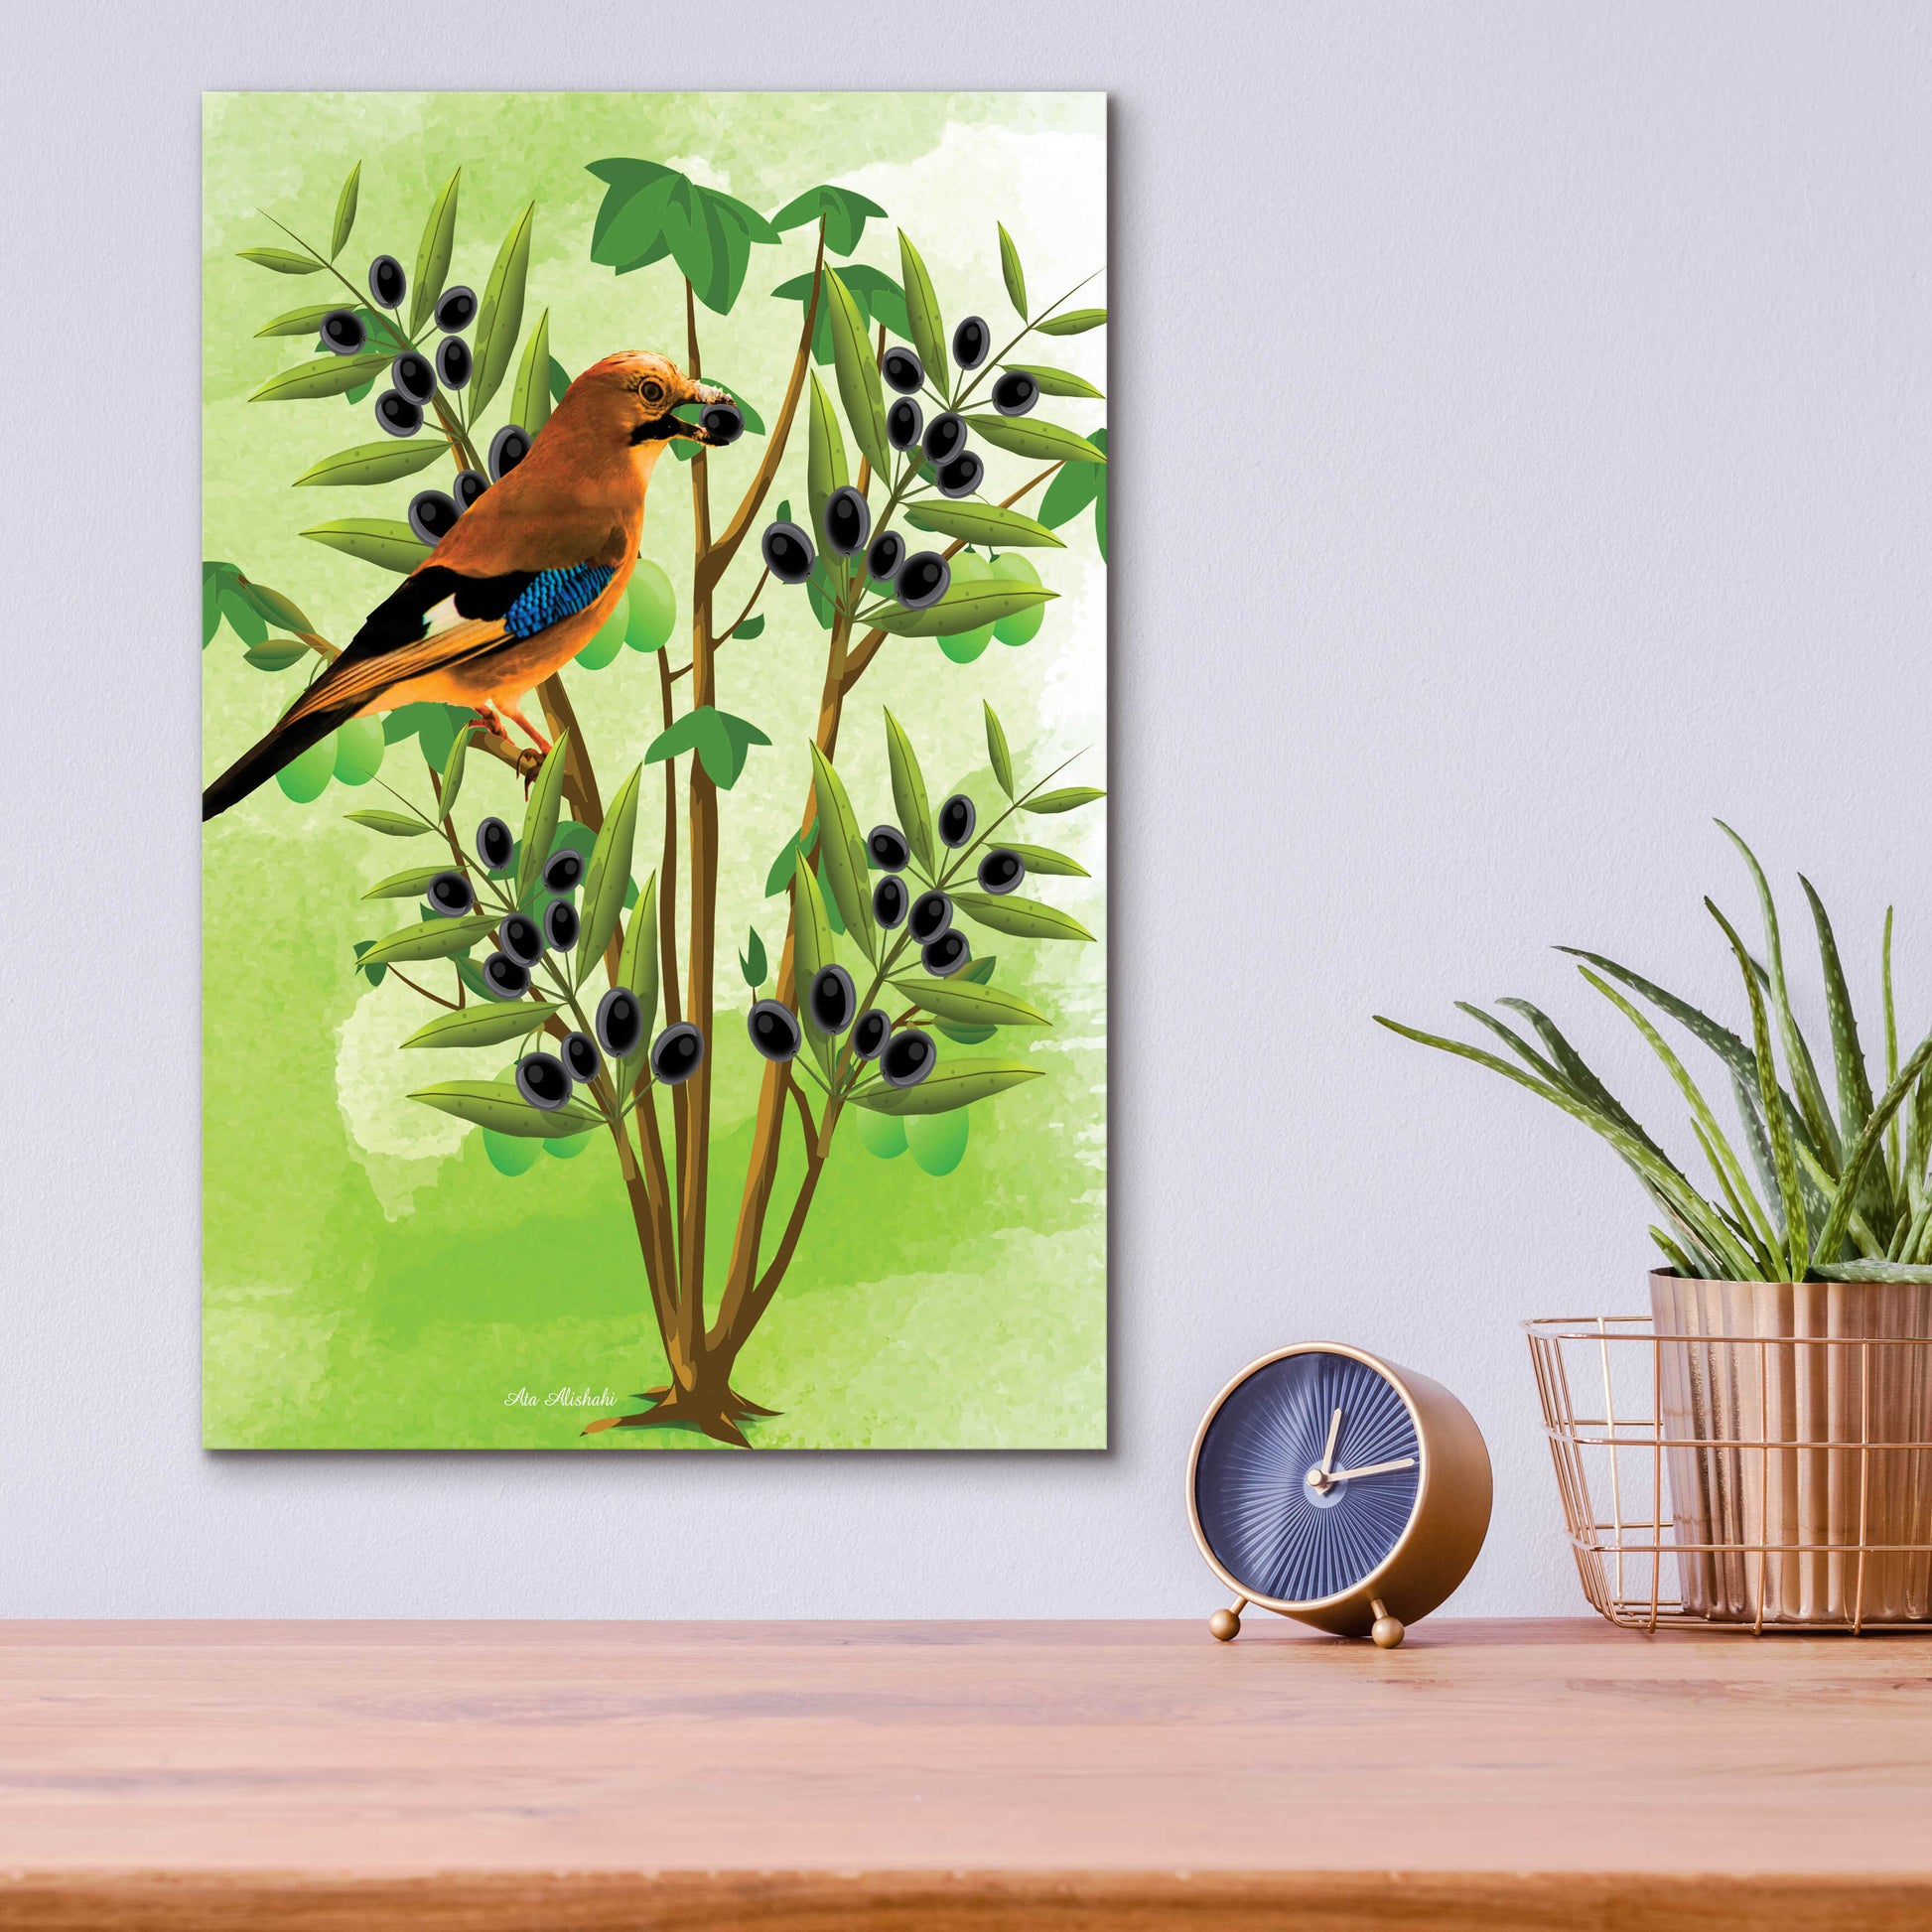 Epic Art 'Bird on Plant' by Ata Alishahi, Acrylic Glass Wall Art,12x16